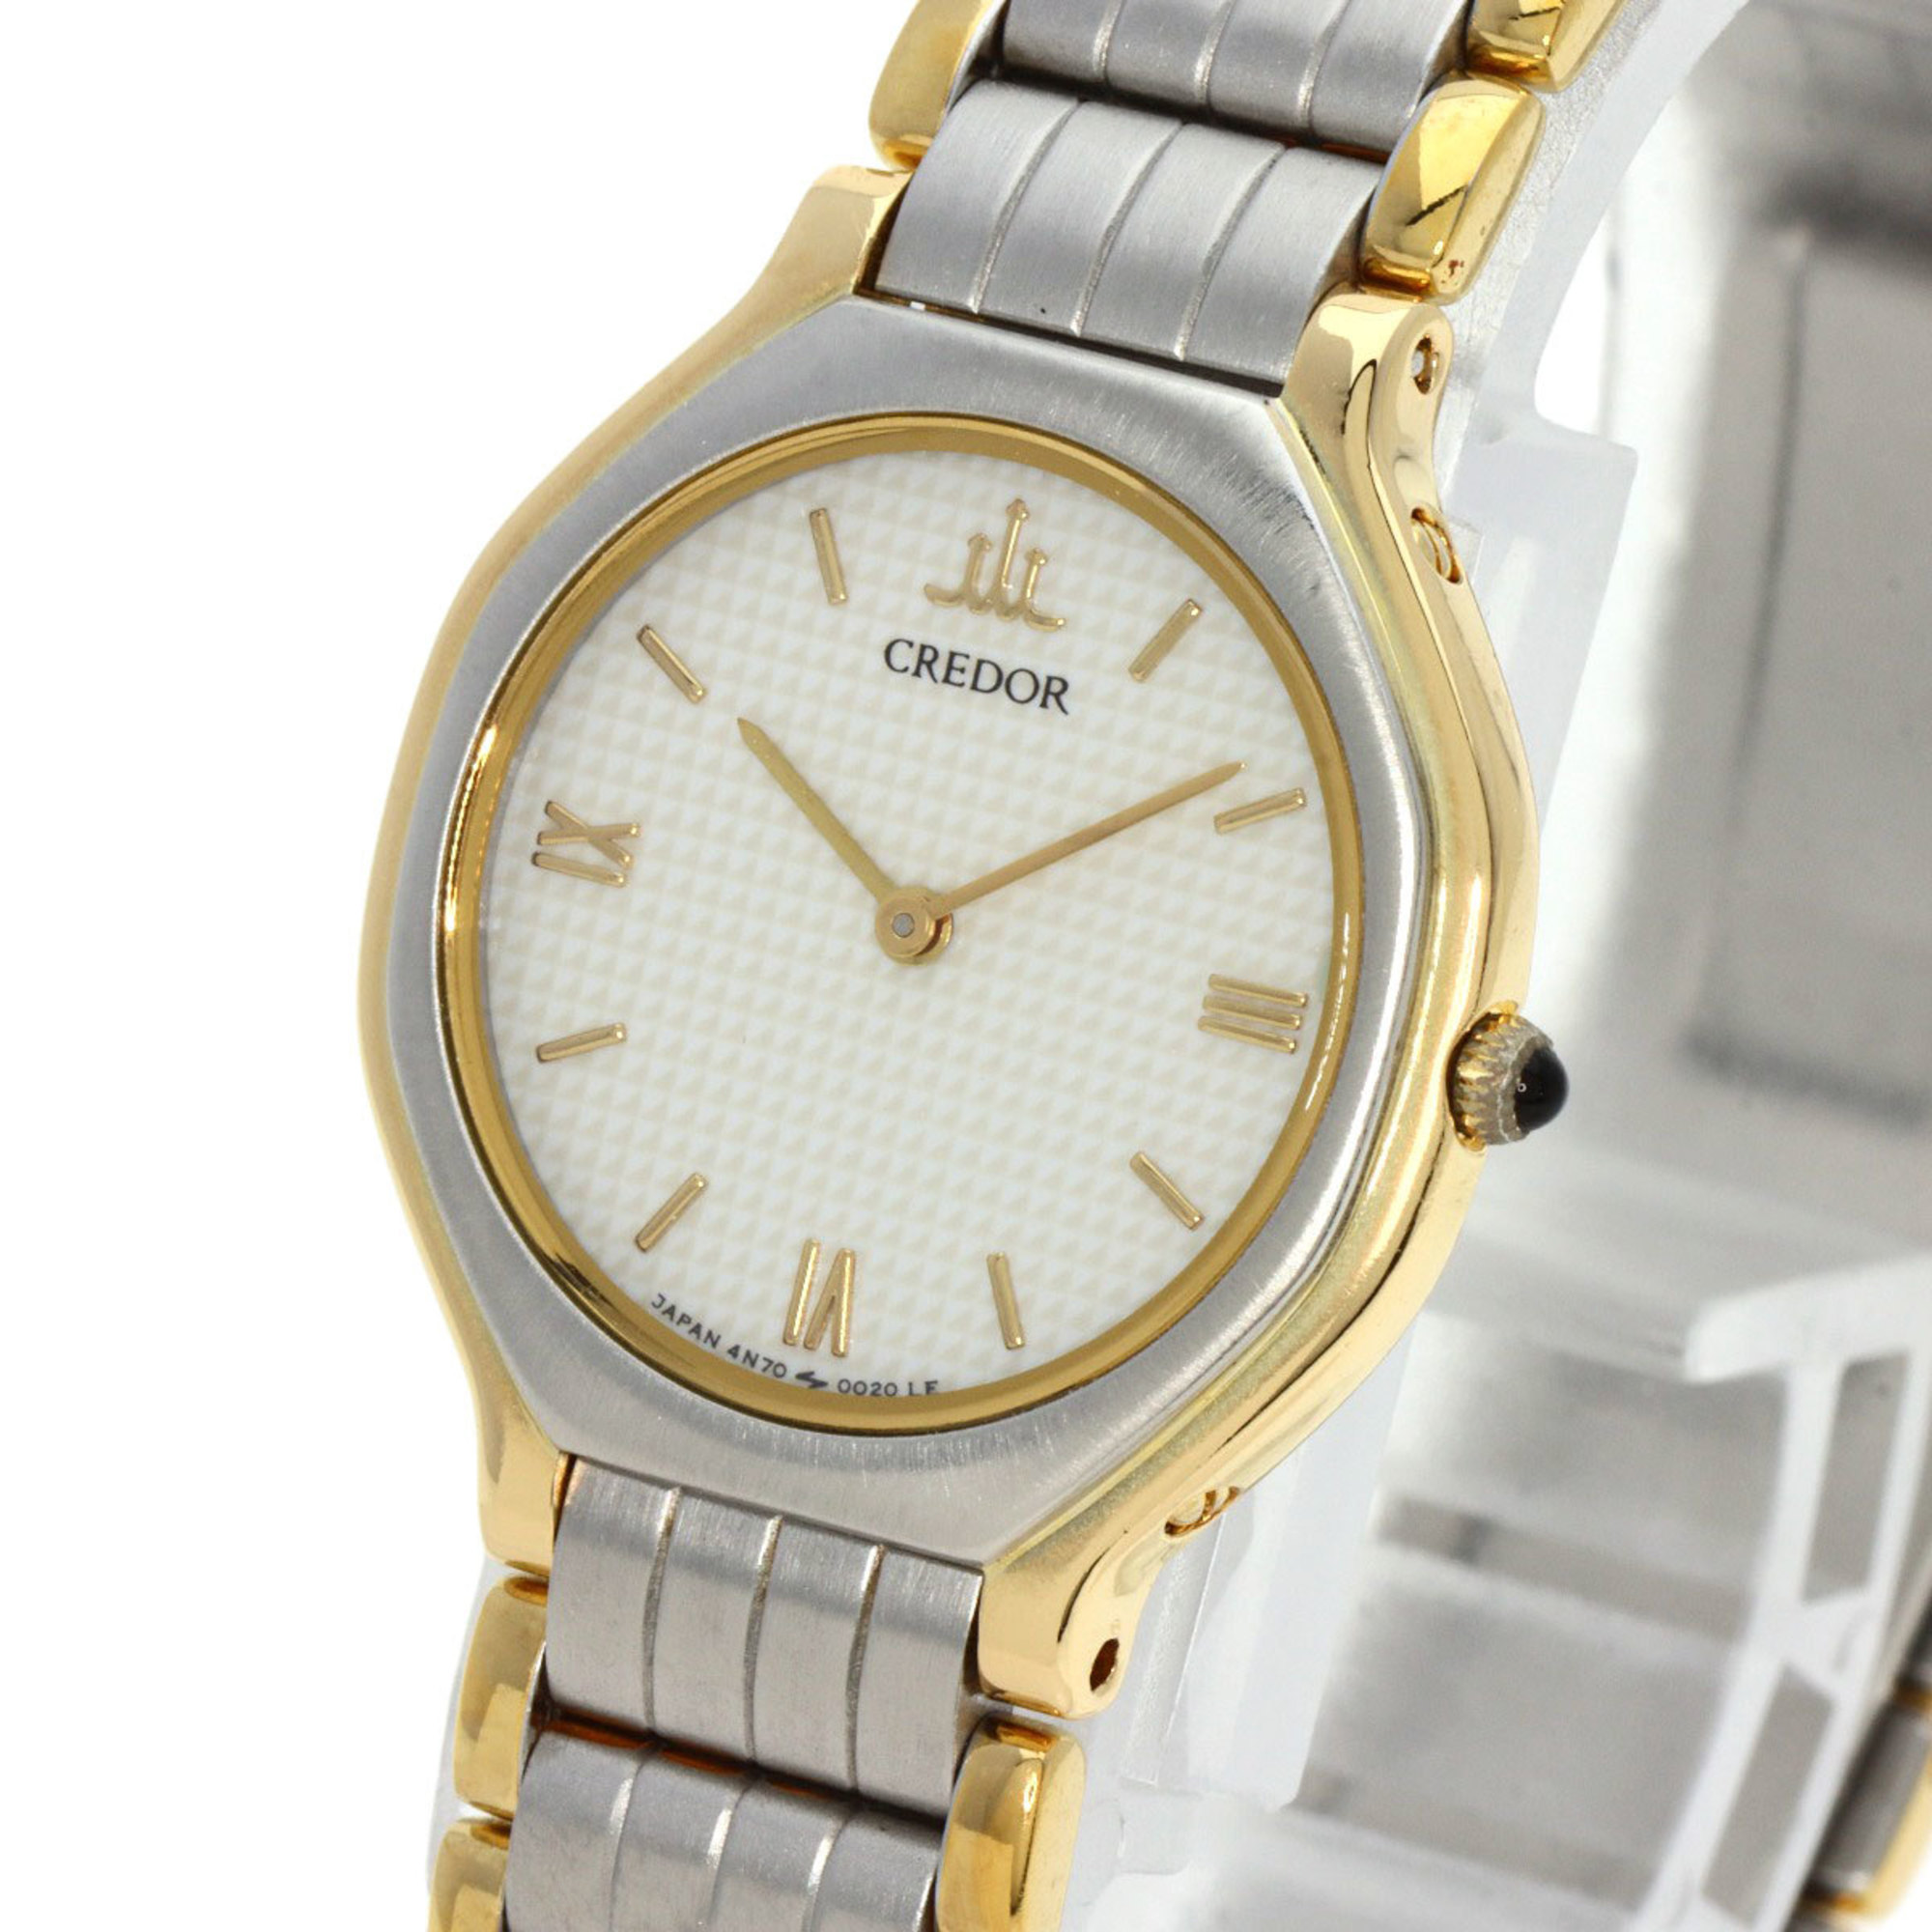 Seiko 4N70-0010 Credor combination watch, stainless steel/SSxK18YG, ladies', SEIKO